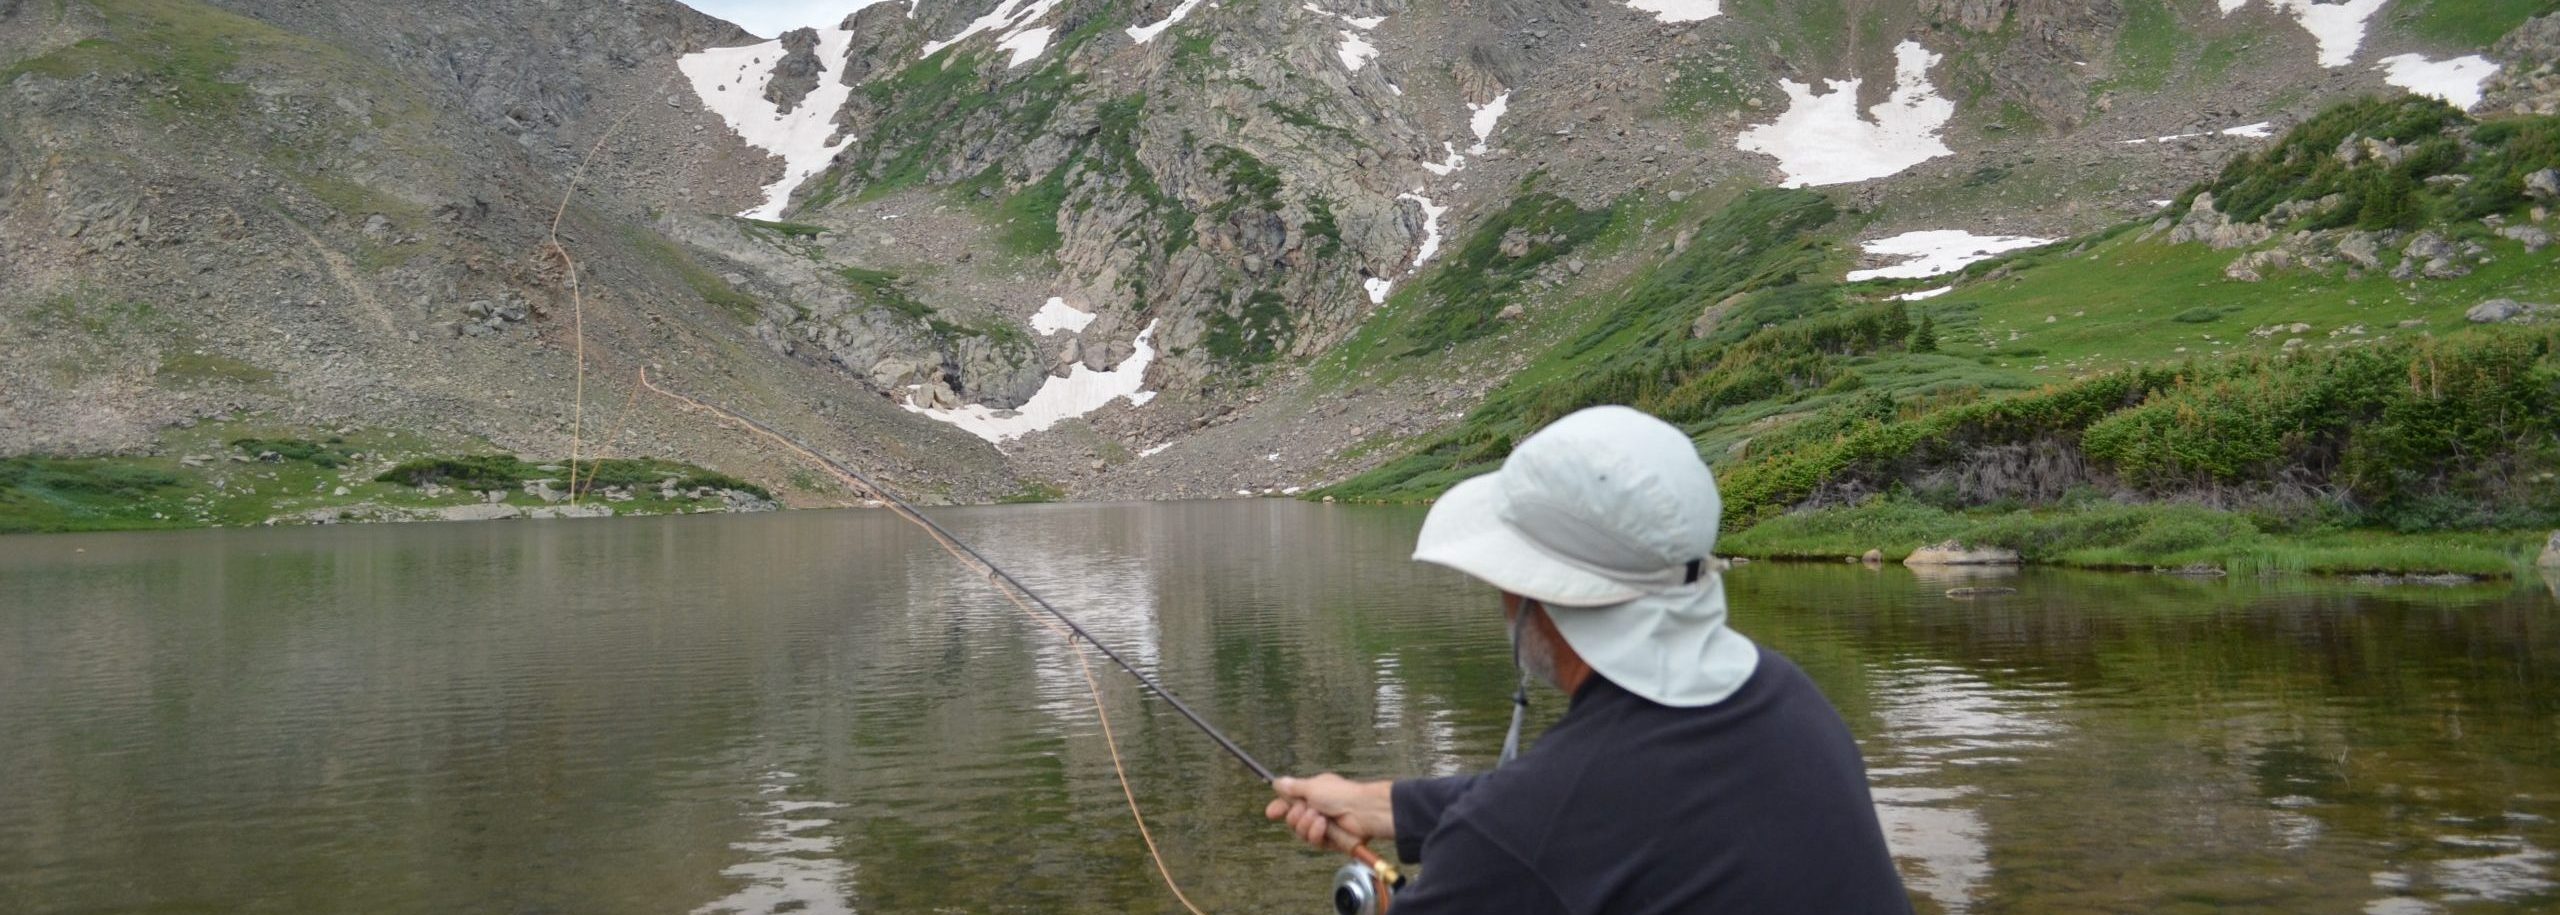 Fishing in Alpine lakes near Breckenridge